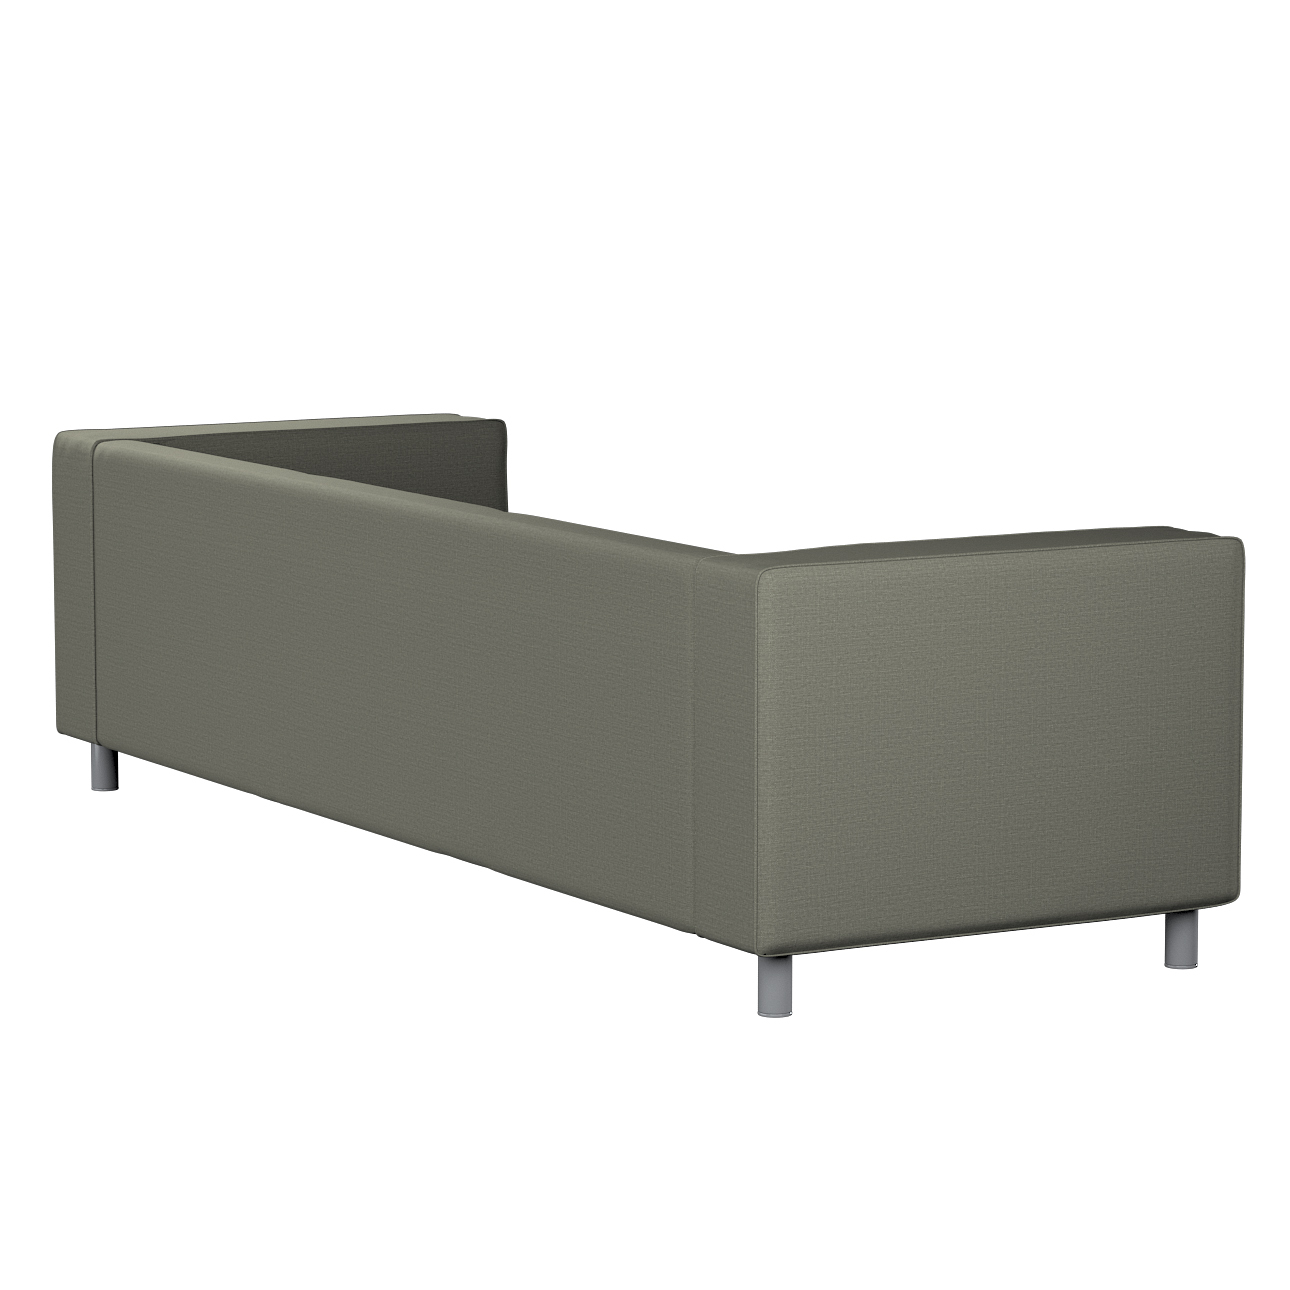 Bezug für Klippan 4-Sitzer Sofa, grau-beige, Bezug für Klippan 4-Sitzer, Li günstig online kaufen